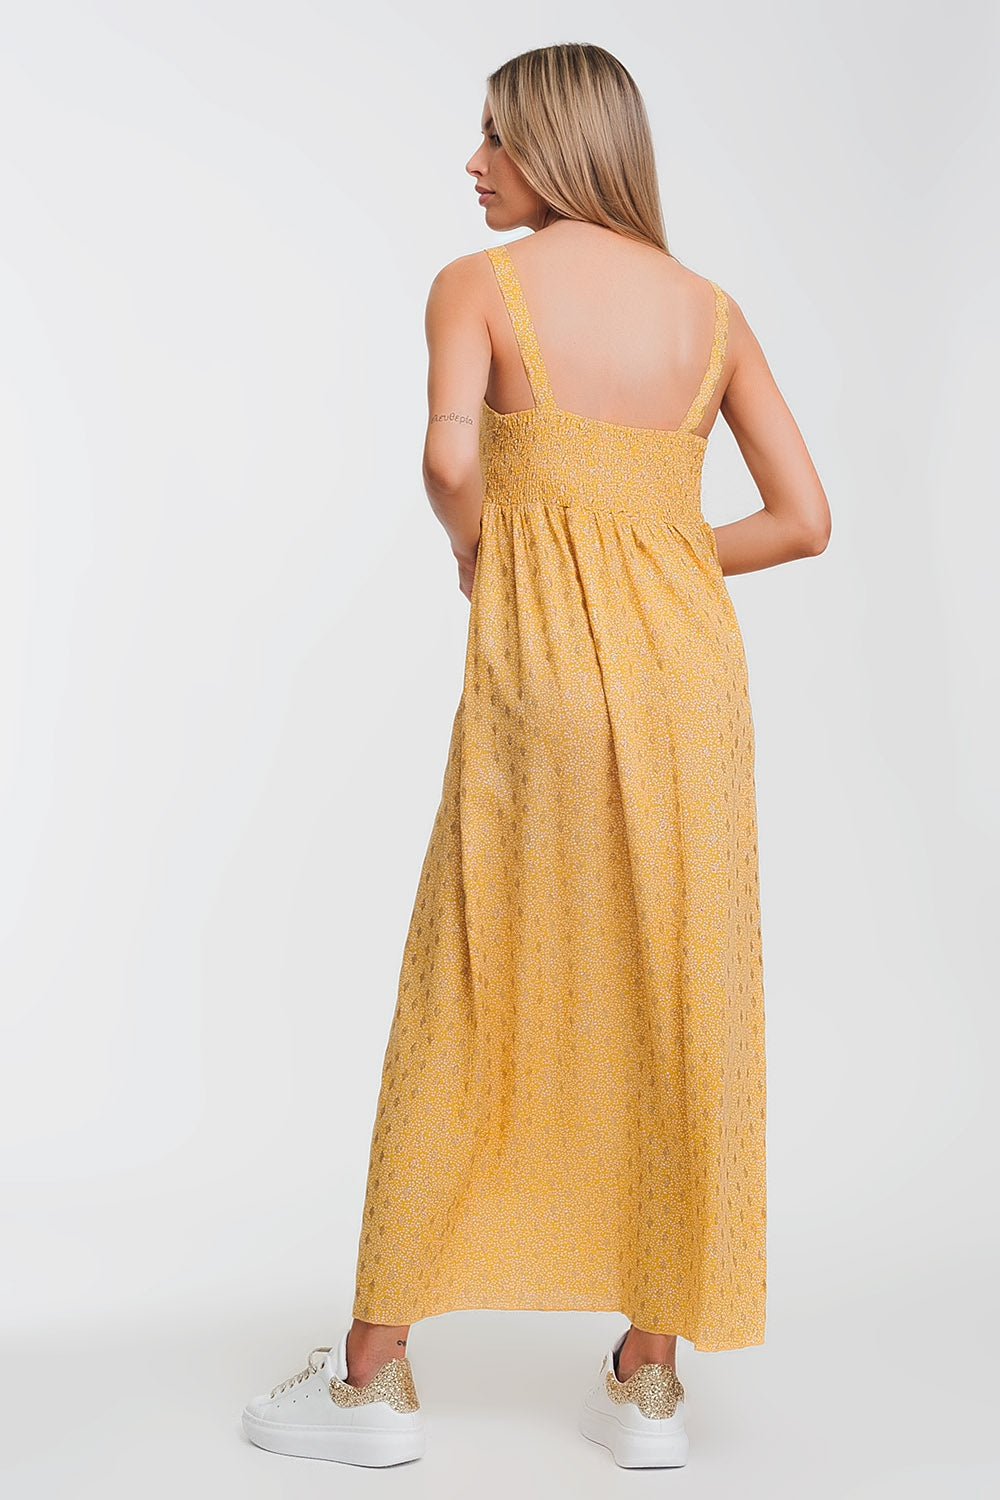 tie front midi yellow dress in floral print Szua Store